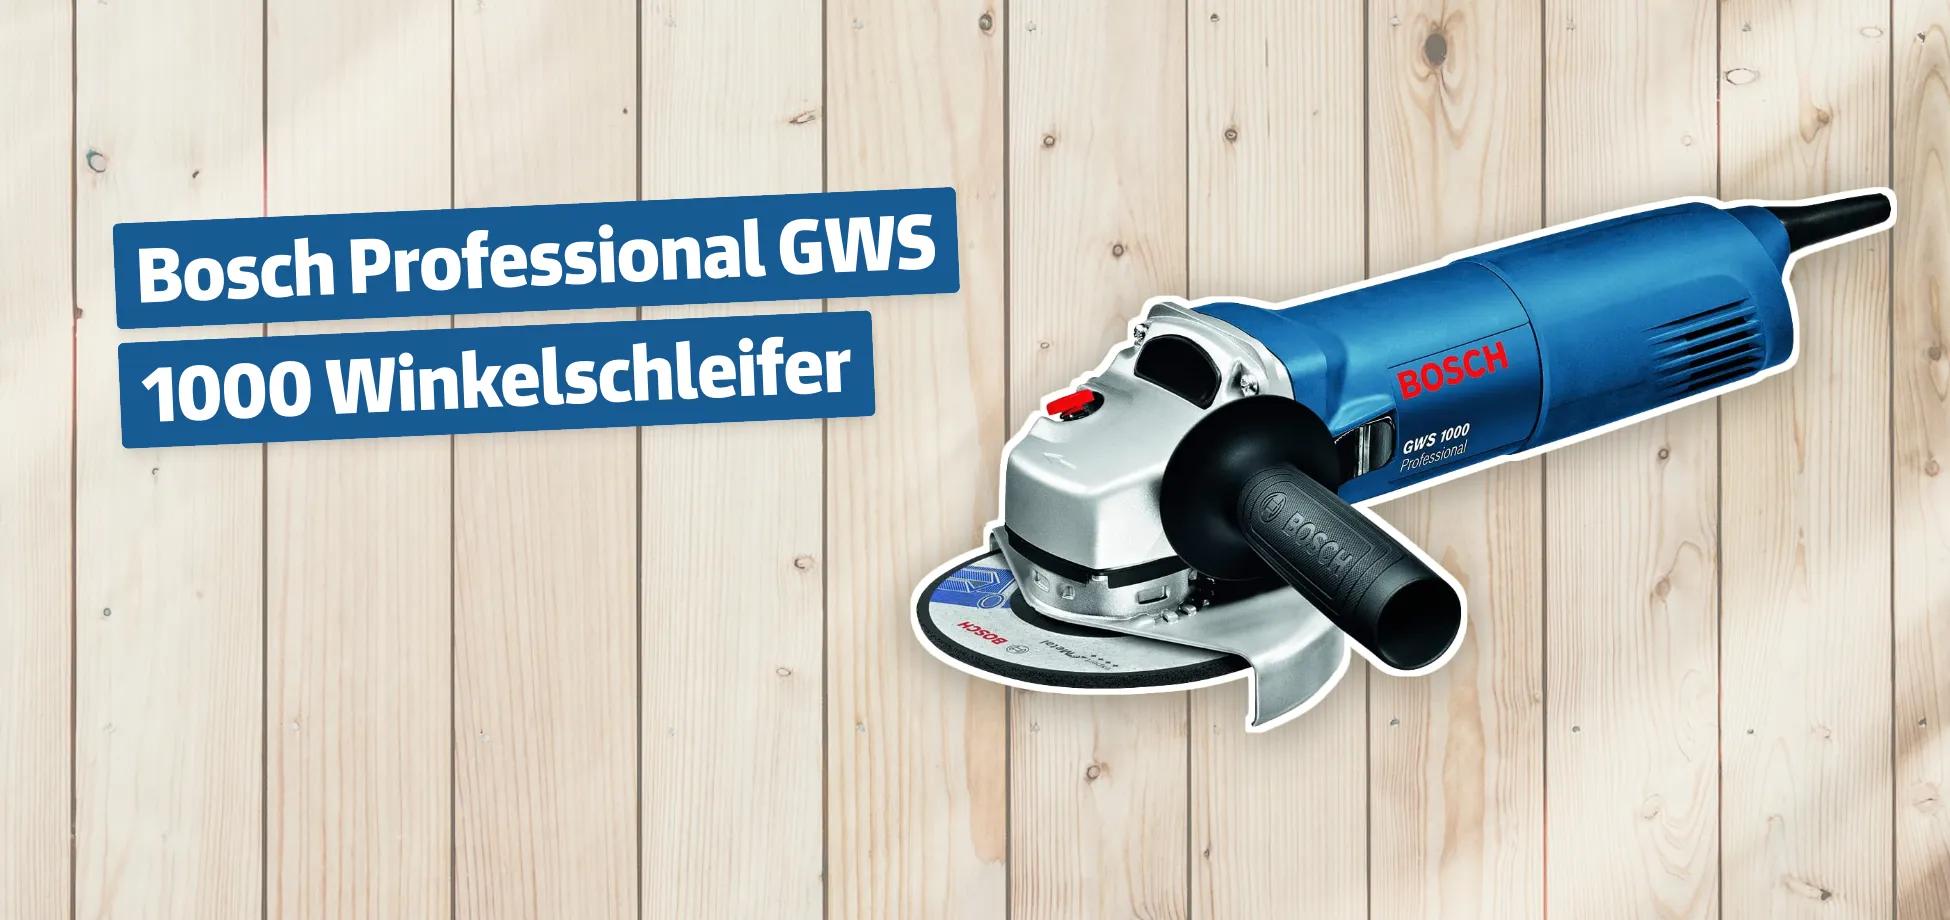 Bosch Professional GWS 1000 Winkelschleifer